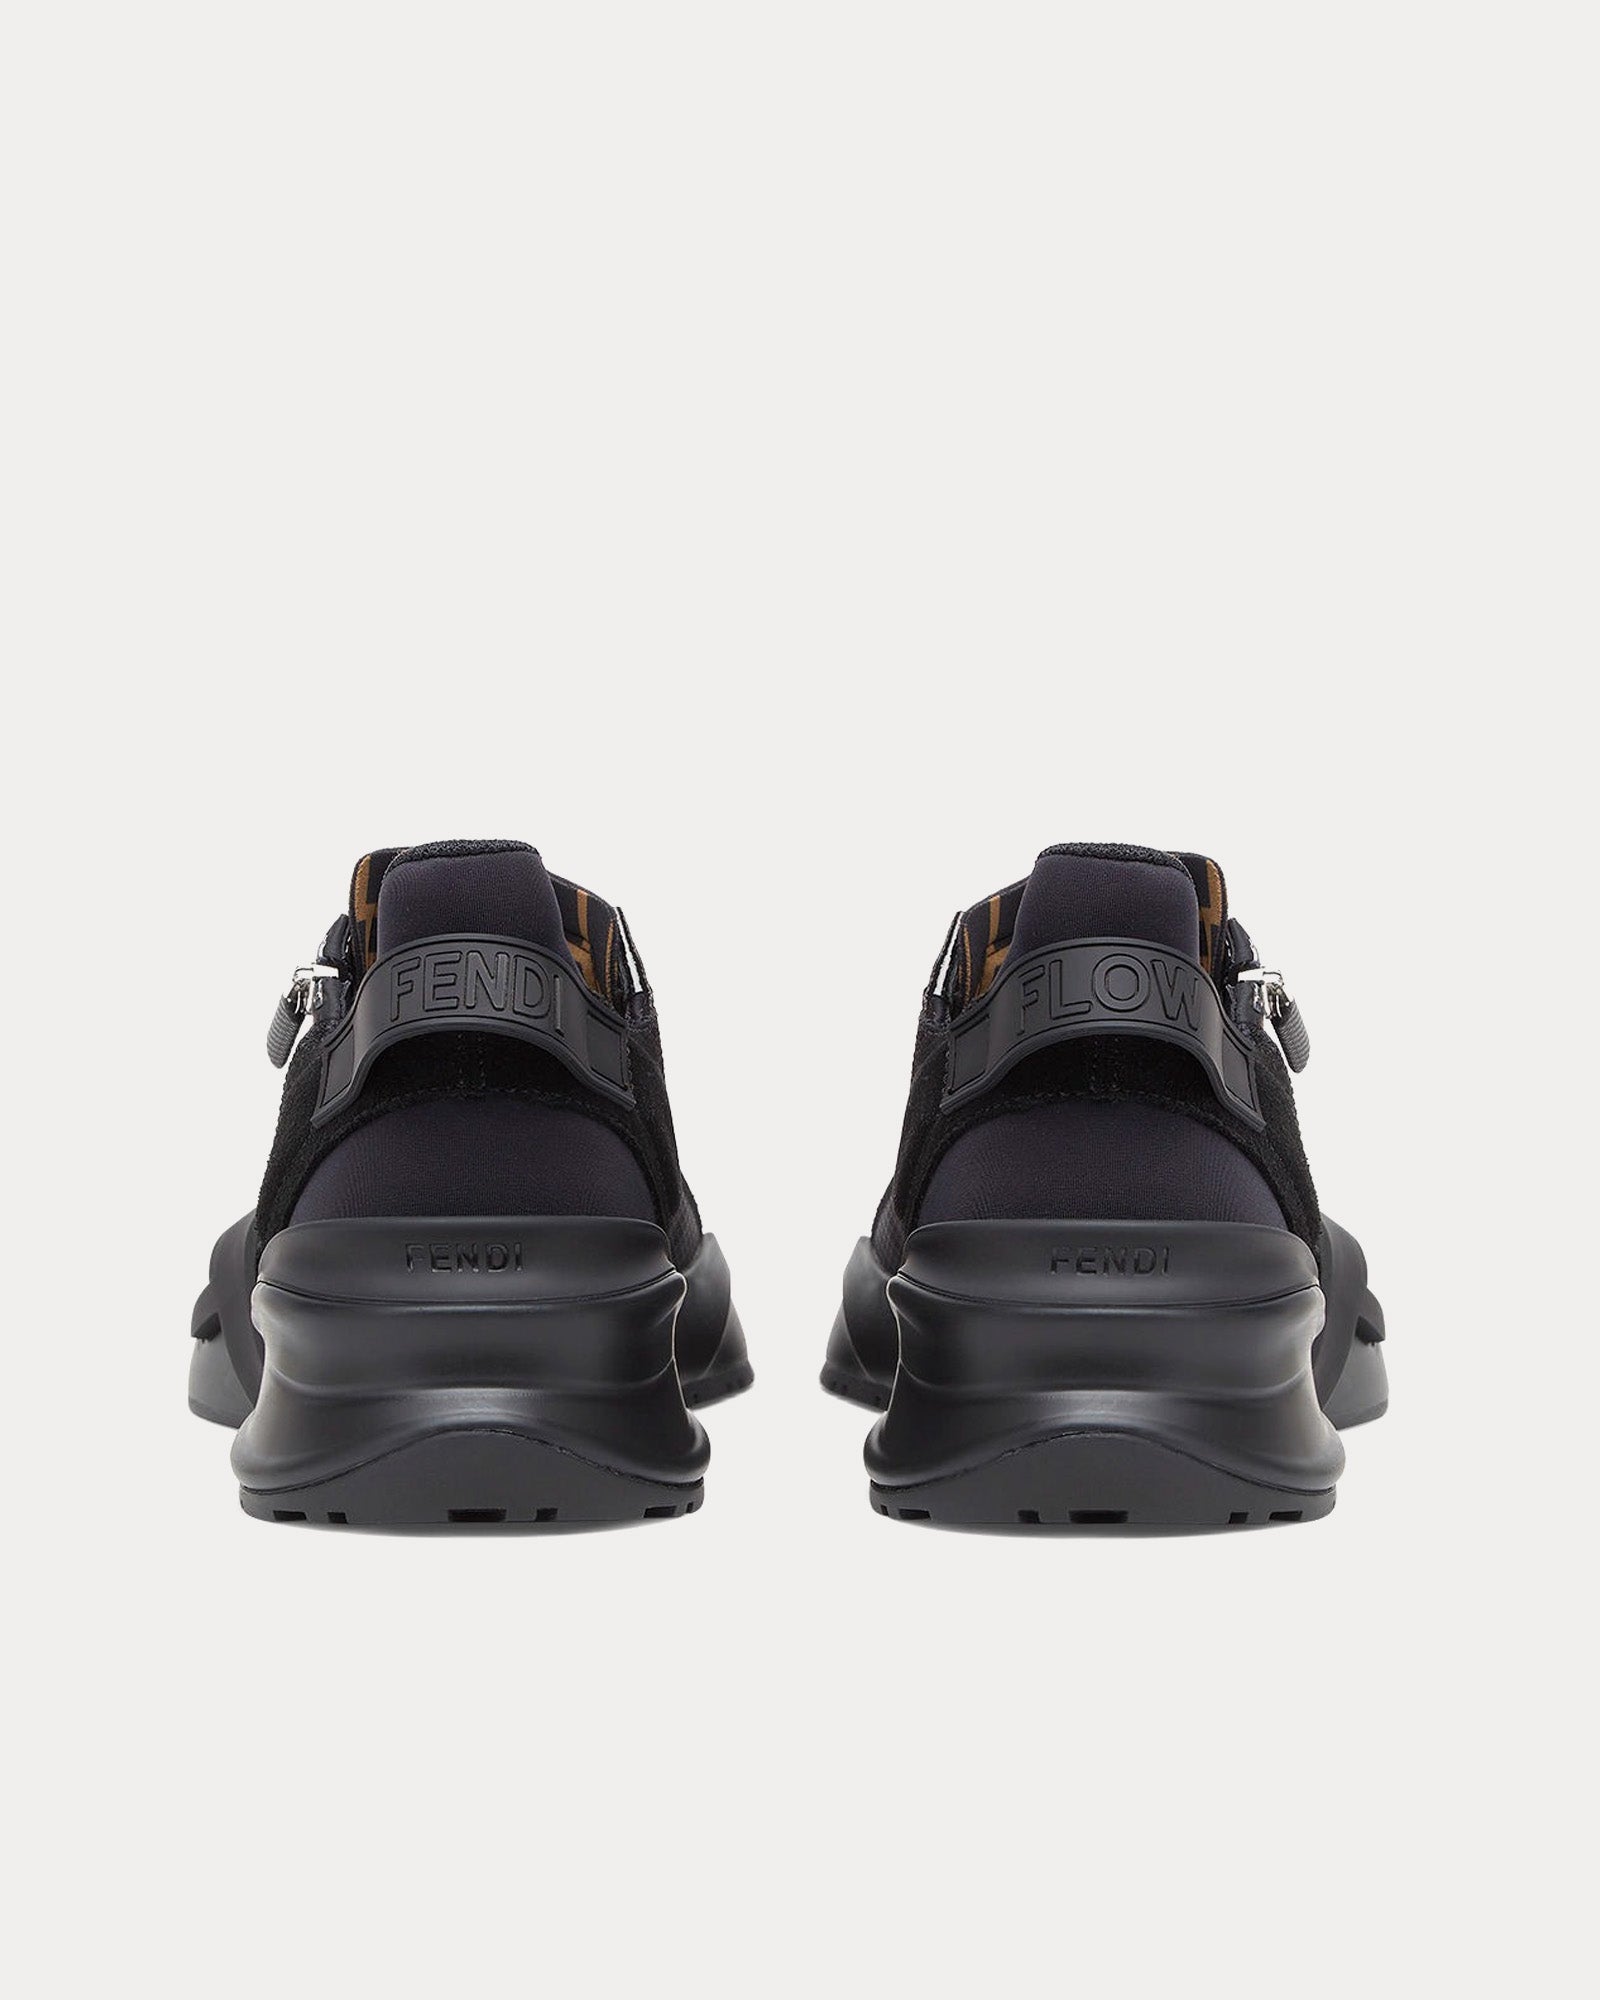 Fendi by Marc Jacobs - Flow Nylon Black Low Top Sneakers